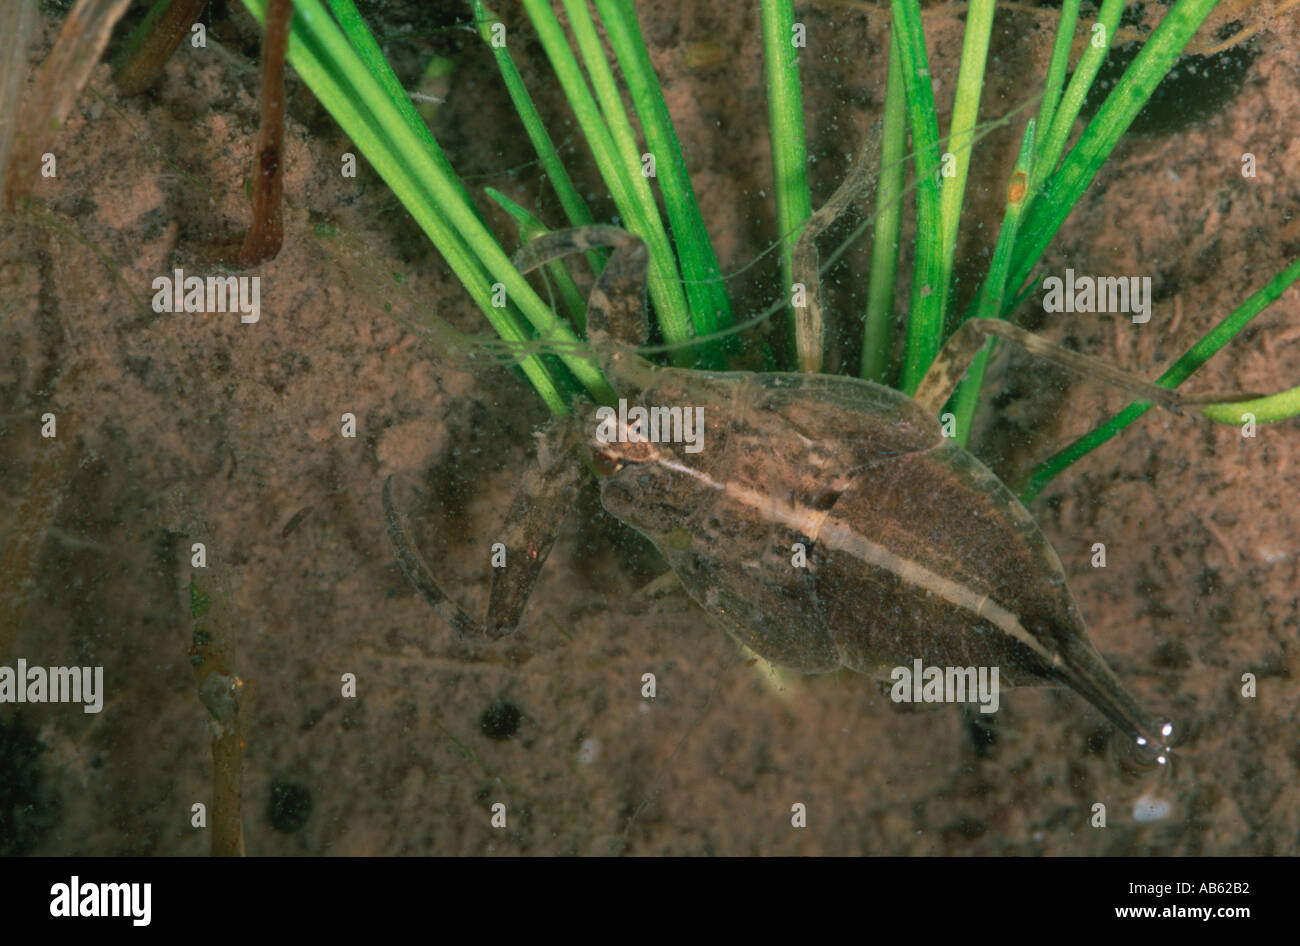 Nepa cinerea water scorpion Donana National Park Spain Stock Photo